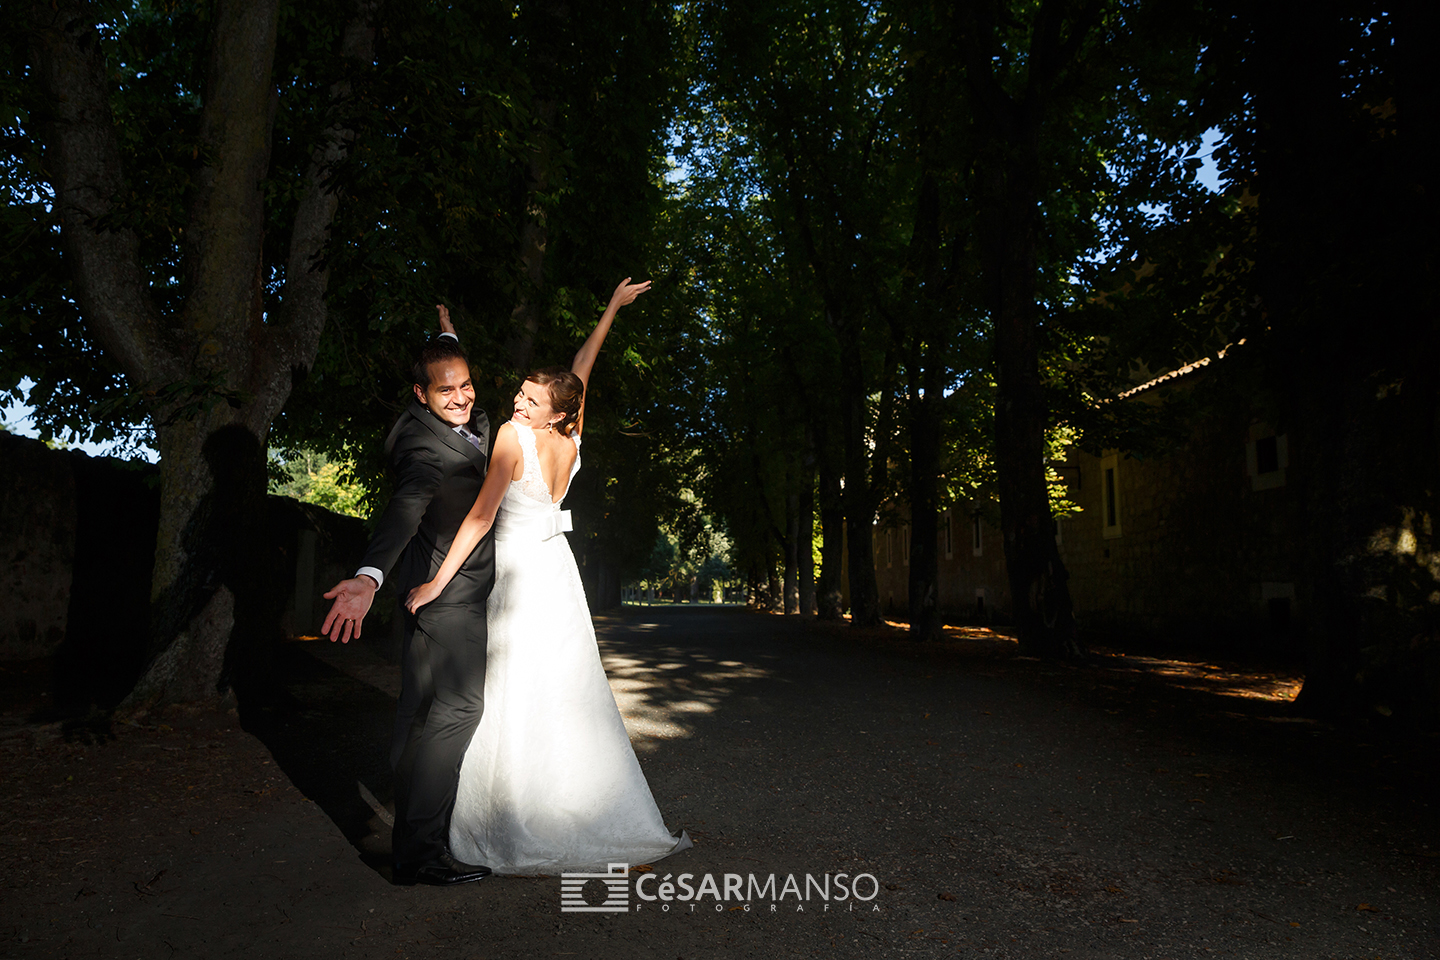 César Manso Fotógrafo: Fotógrafos de boda en Burgos - Boda%20AlejandrayJairo-29.JPG